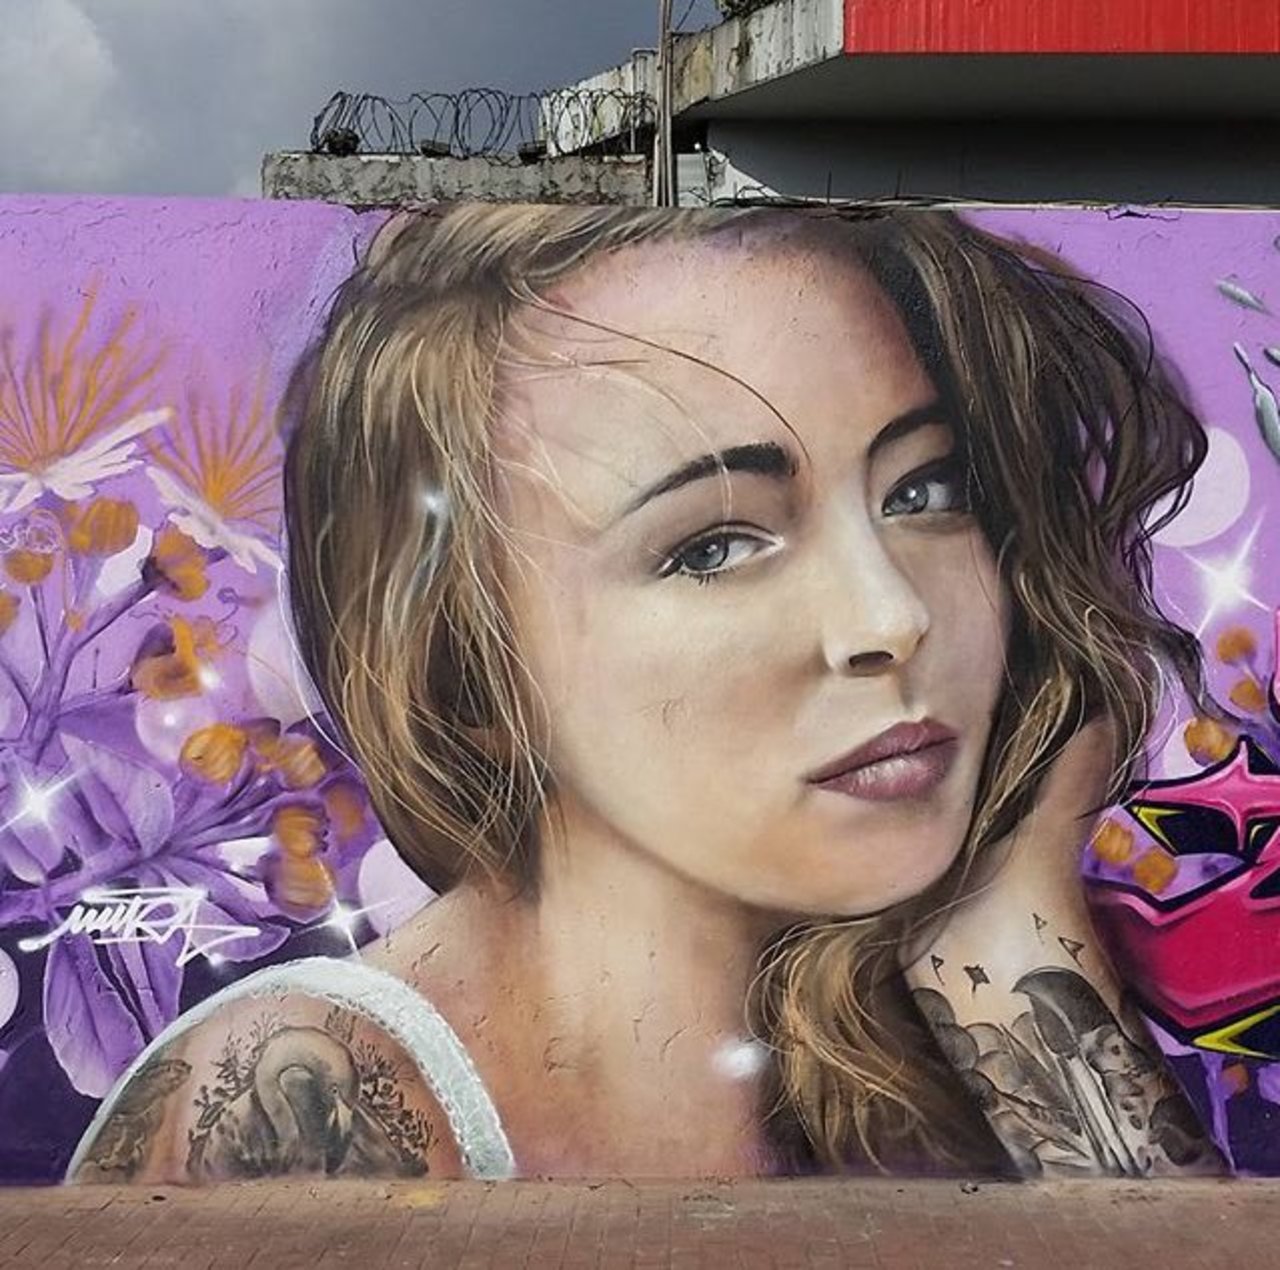 New Street Art by Mantarea 

#art #graffiti #mural #streetart https://t.co/UfkvWawdfE